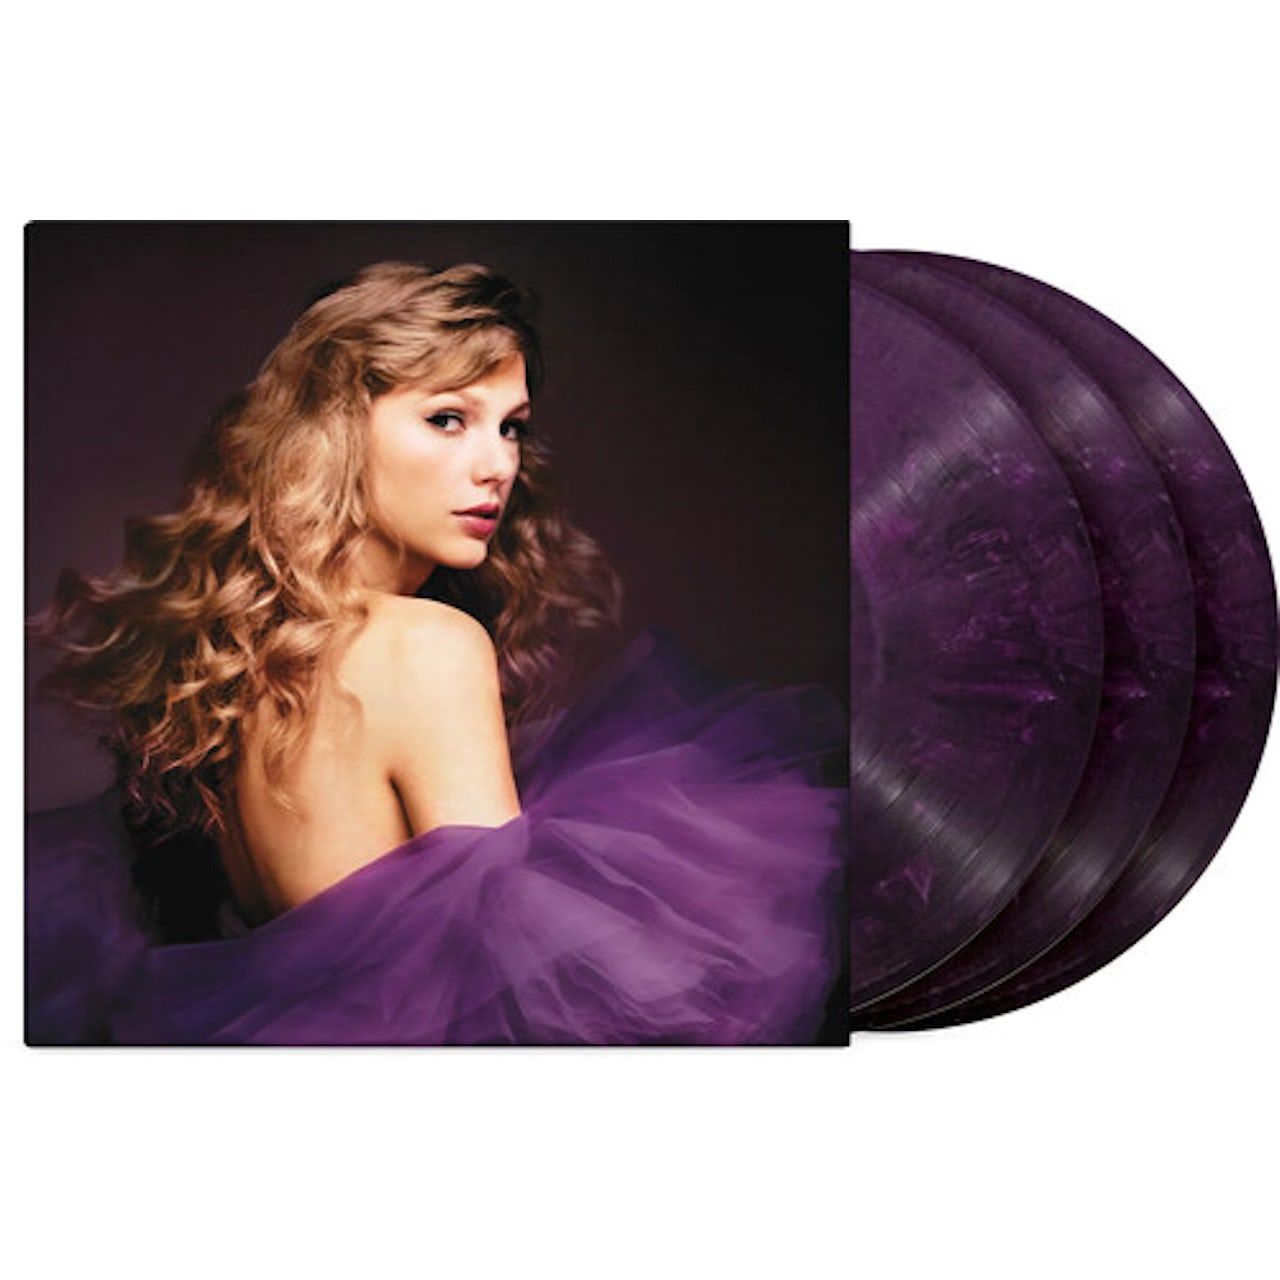 0602448438065, Виниловая пластинка Swift, Taylor, Speak Now (Taylor's Version) (coloured) рок wm the black keys – delta kream limited smokey marbled vinyl